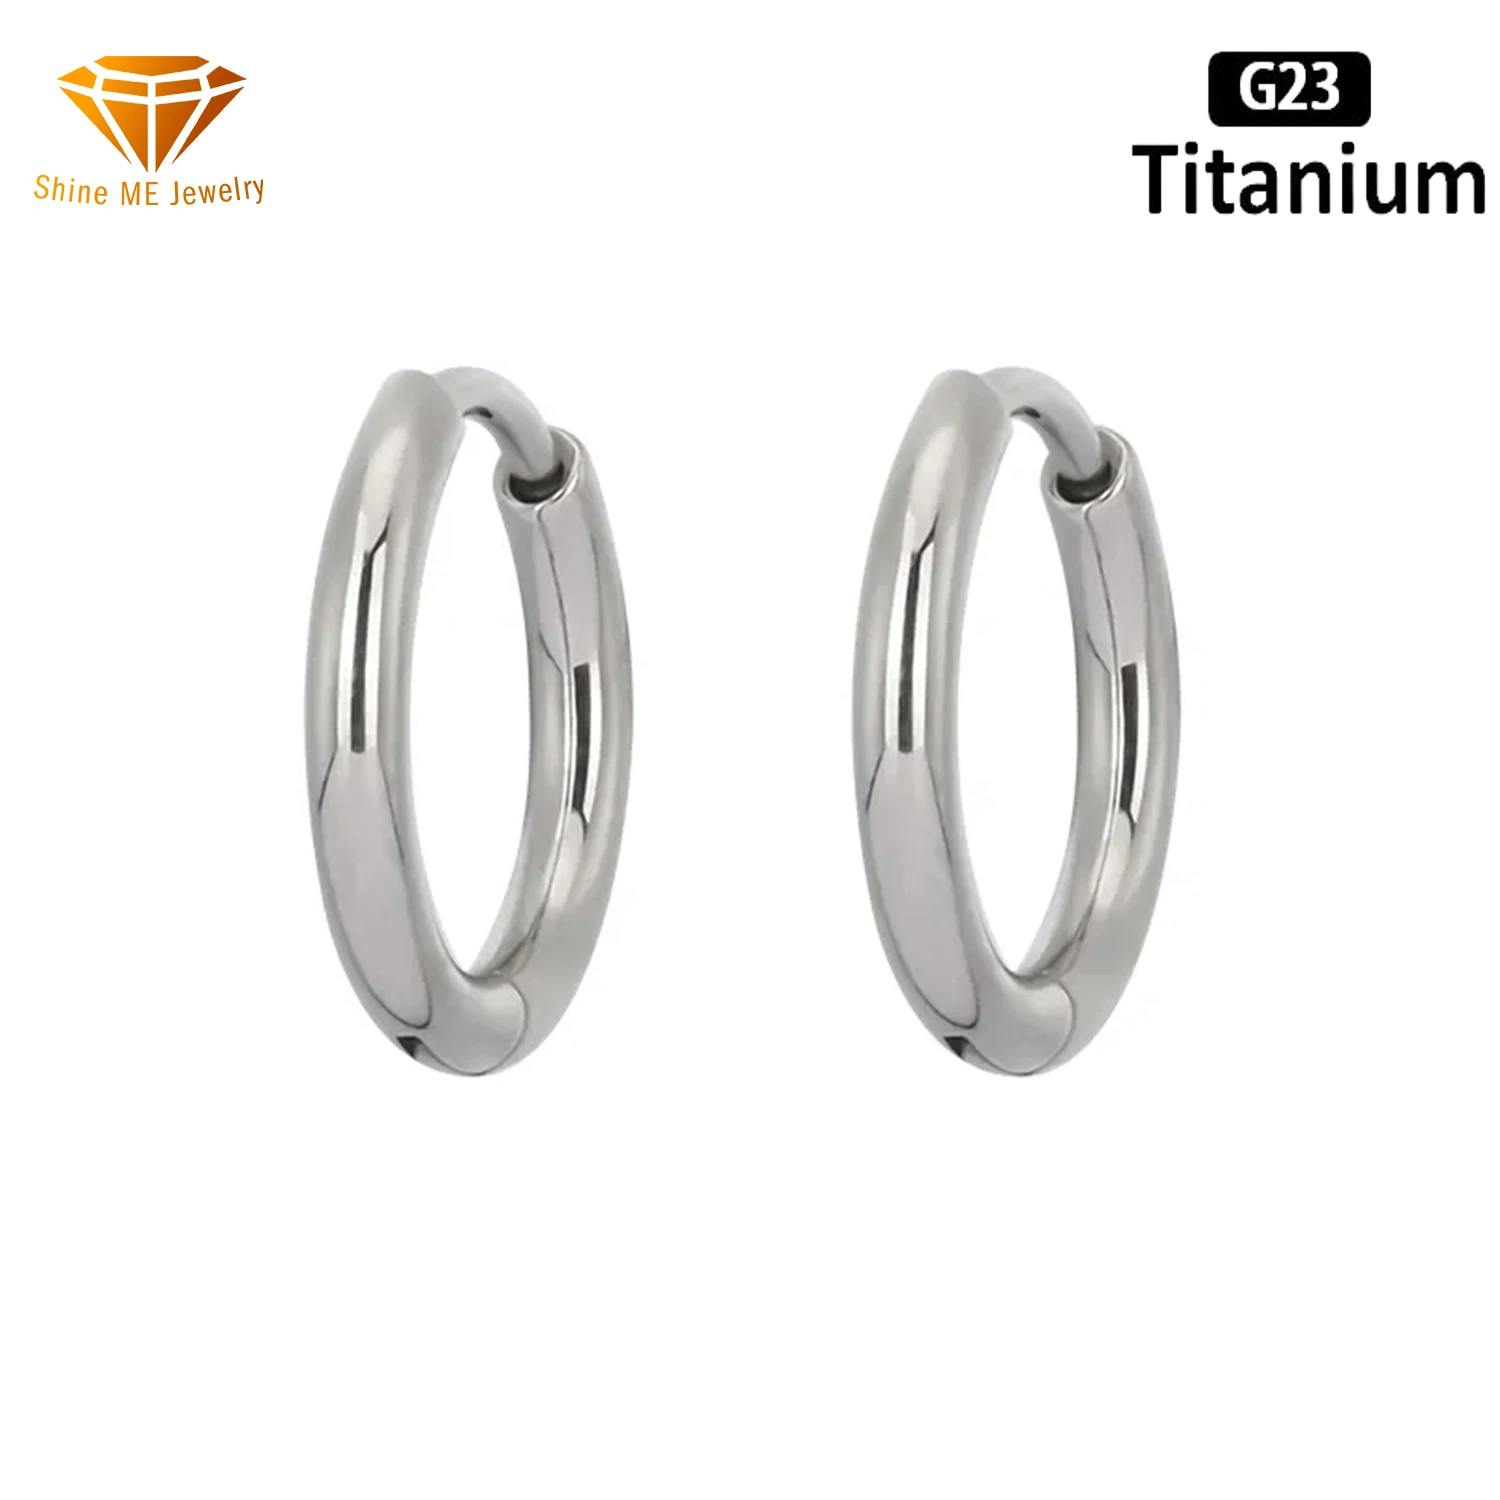 Body Piercing Jewelry Titanium High Polished Segment Earring Hoop Ring Tper99